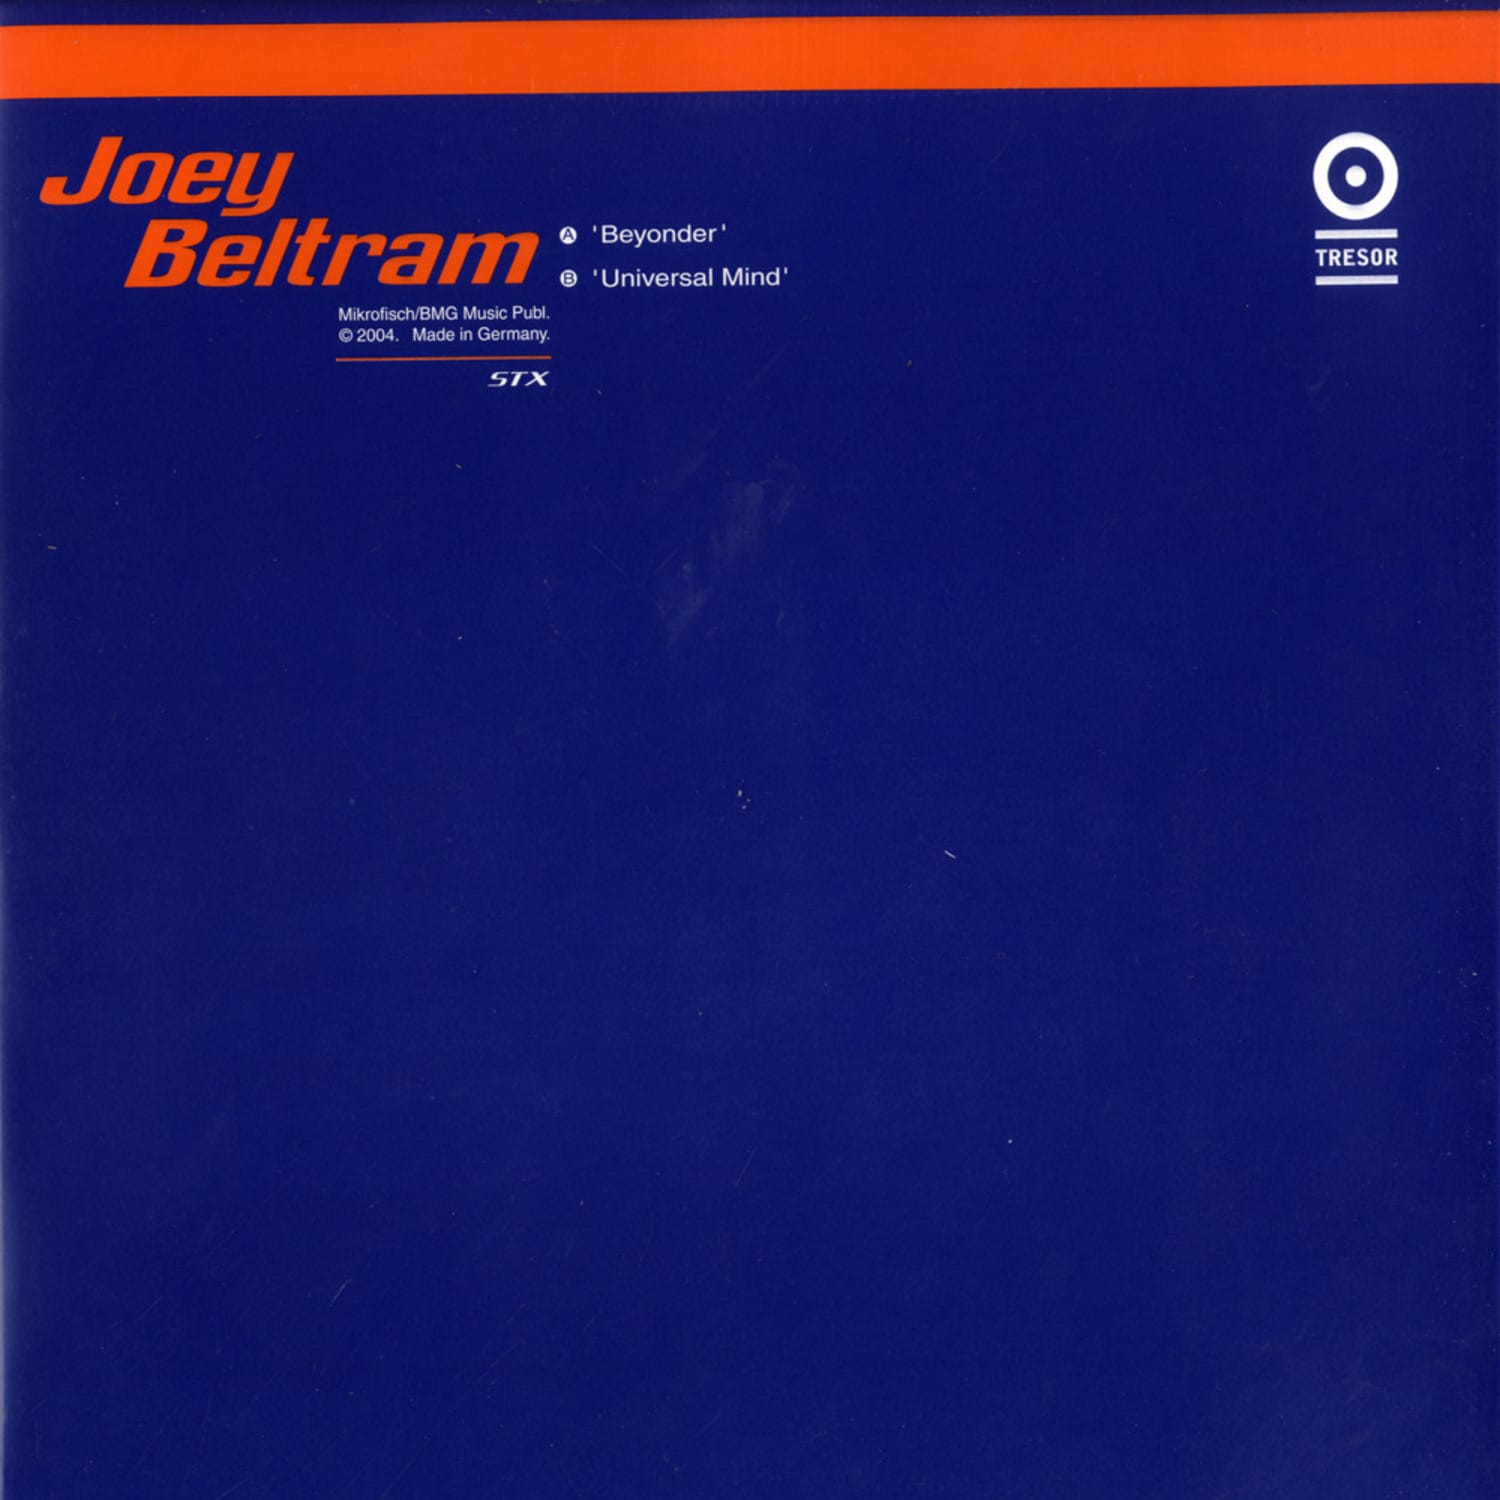 Joey Beltram - BEYONDER